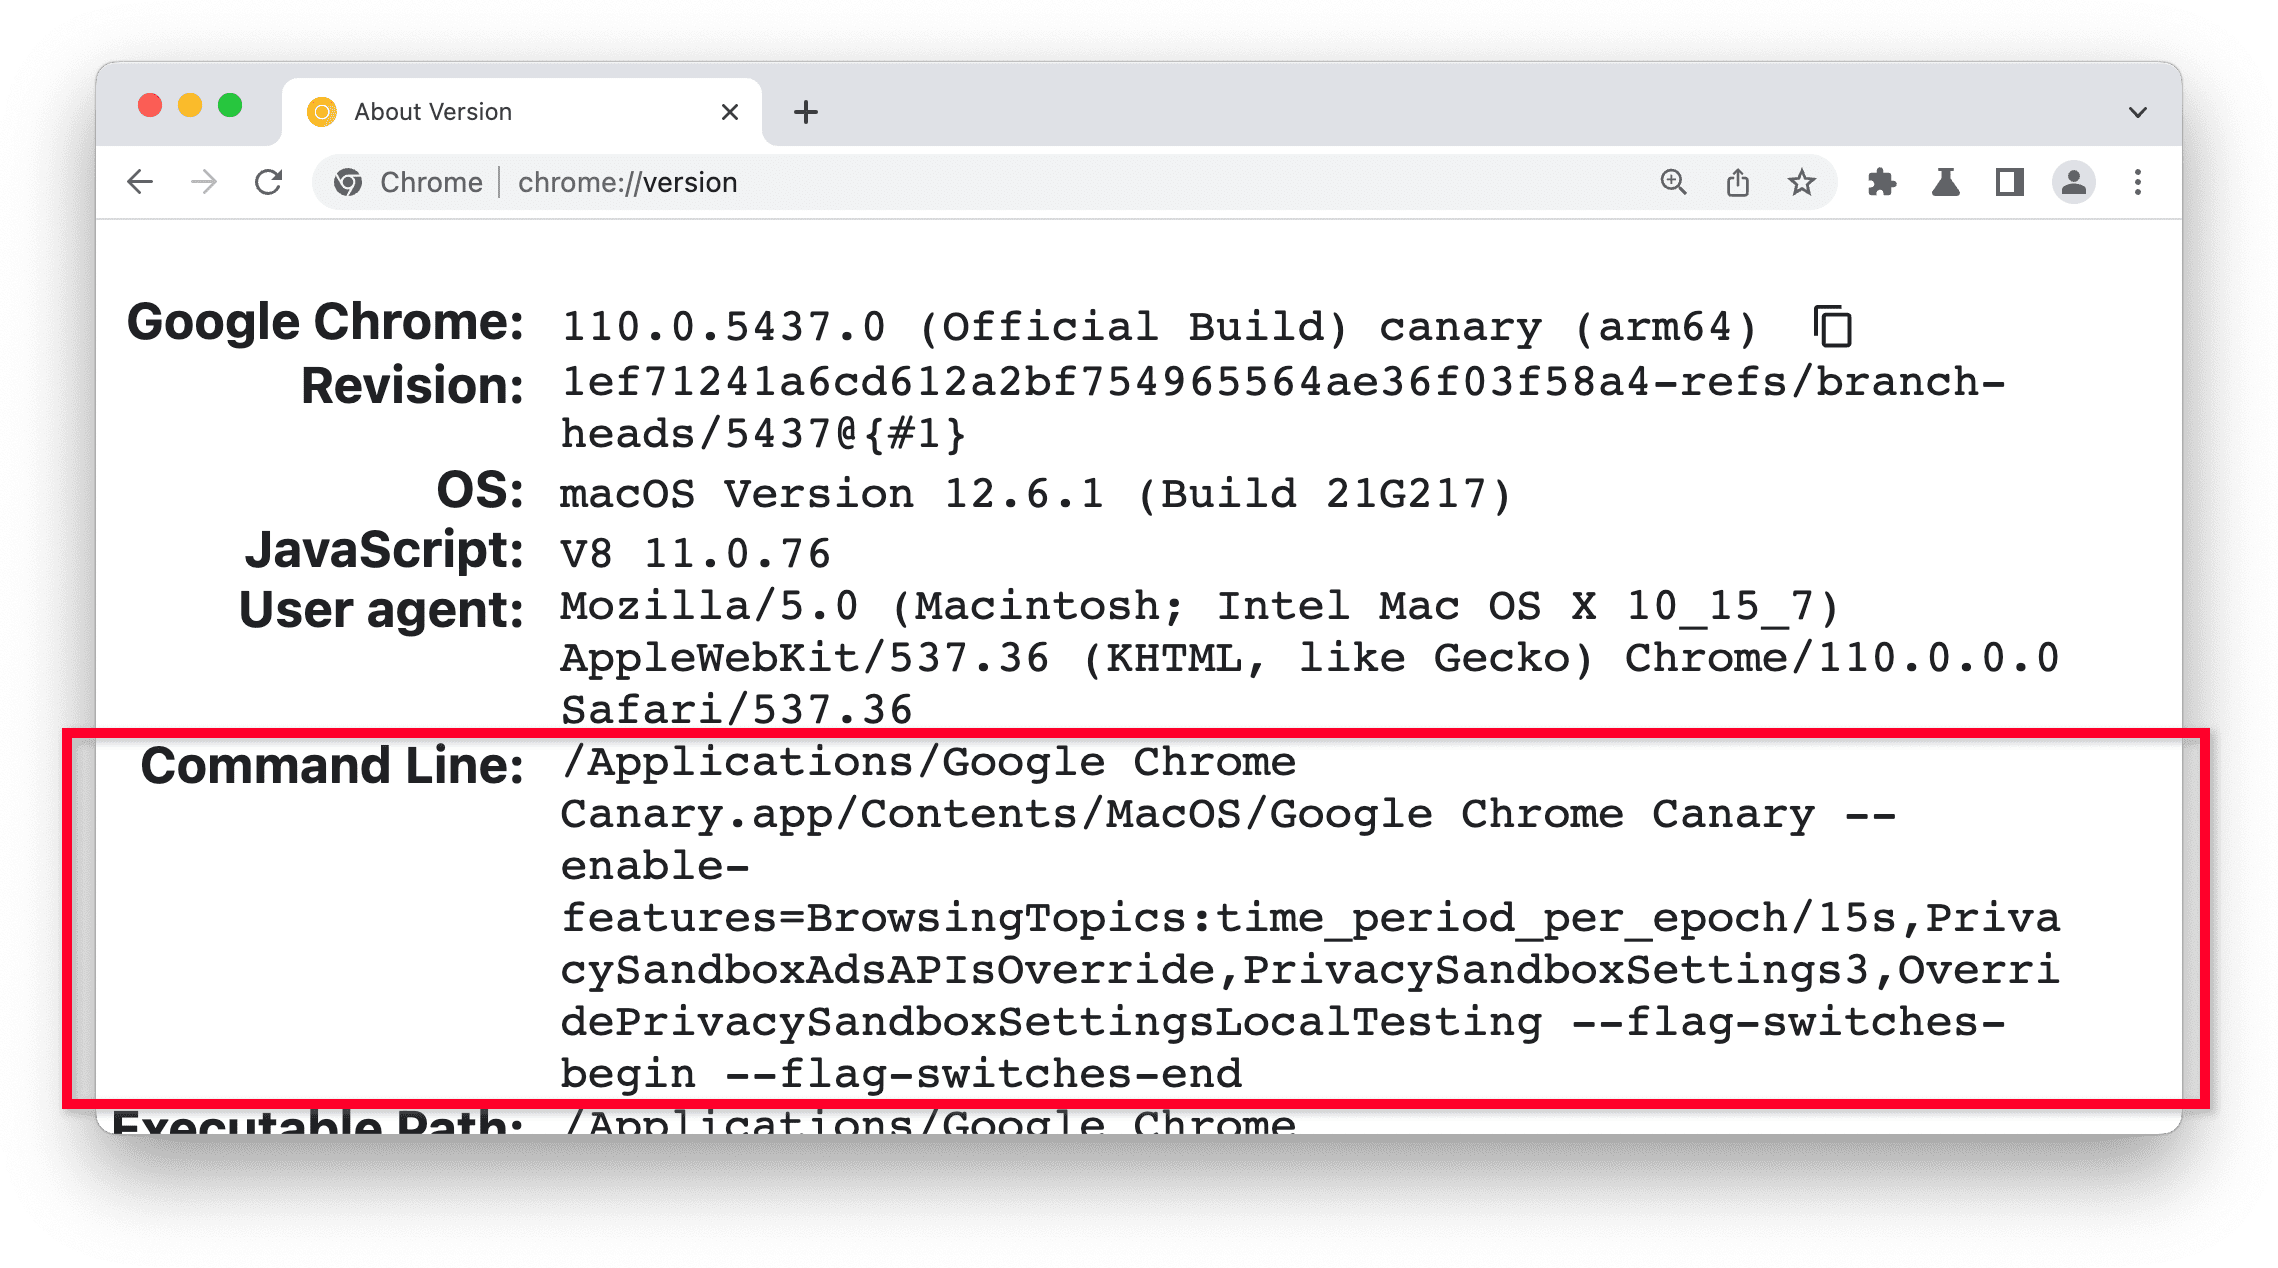 chrome://version page
ב-Chrome Canary, קטע שורת הפקודה מודגש.